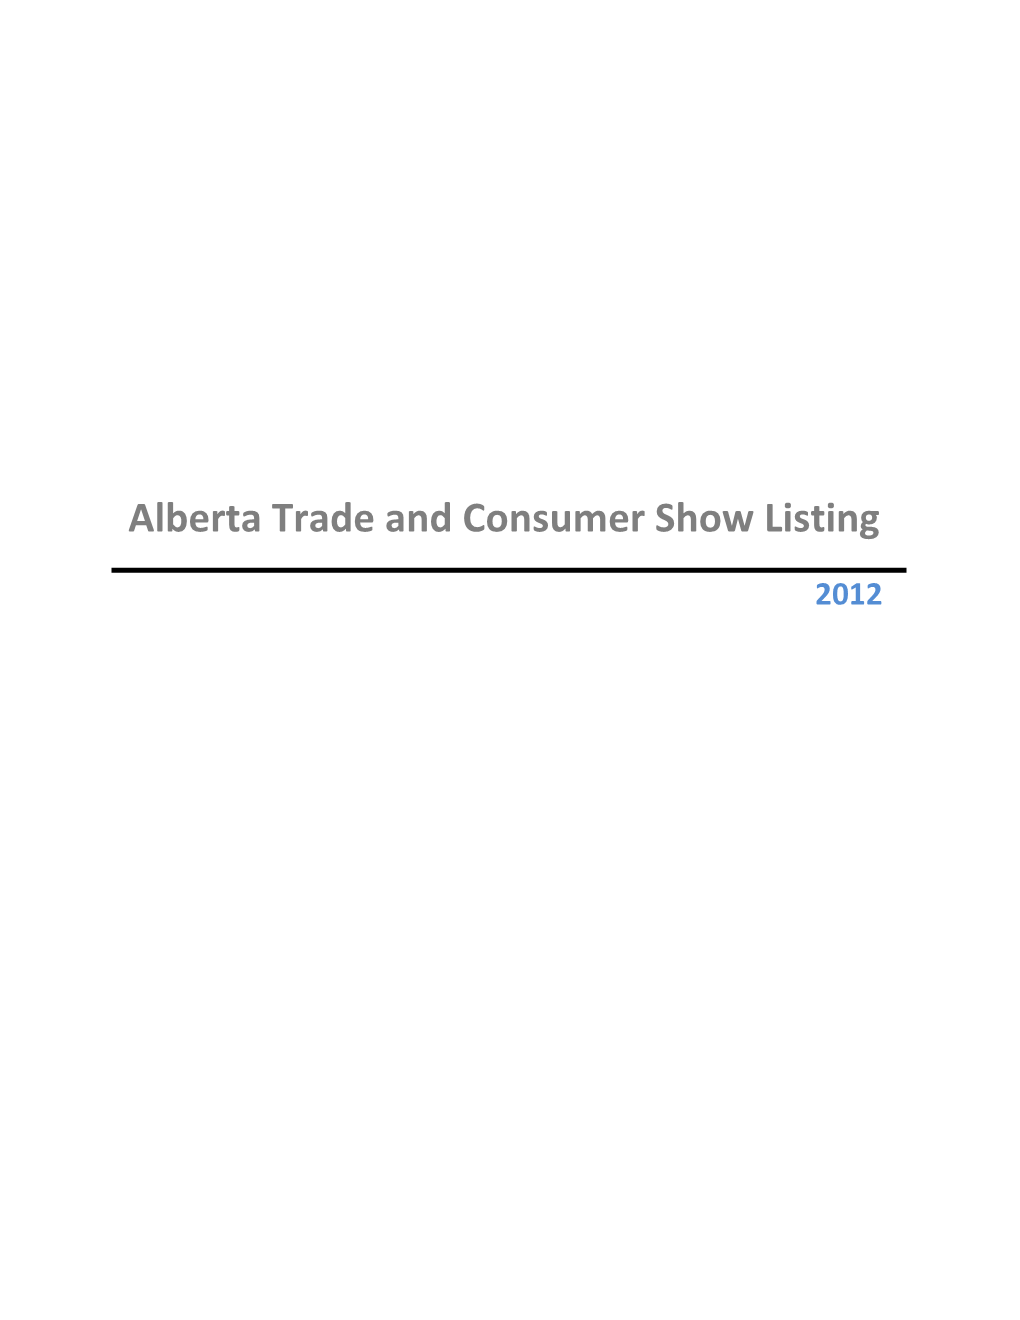 Alberta Trade Show Listing